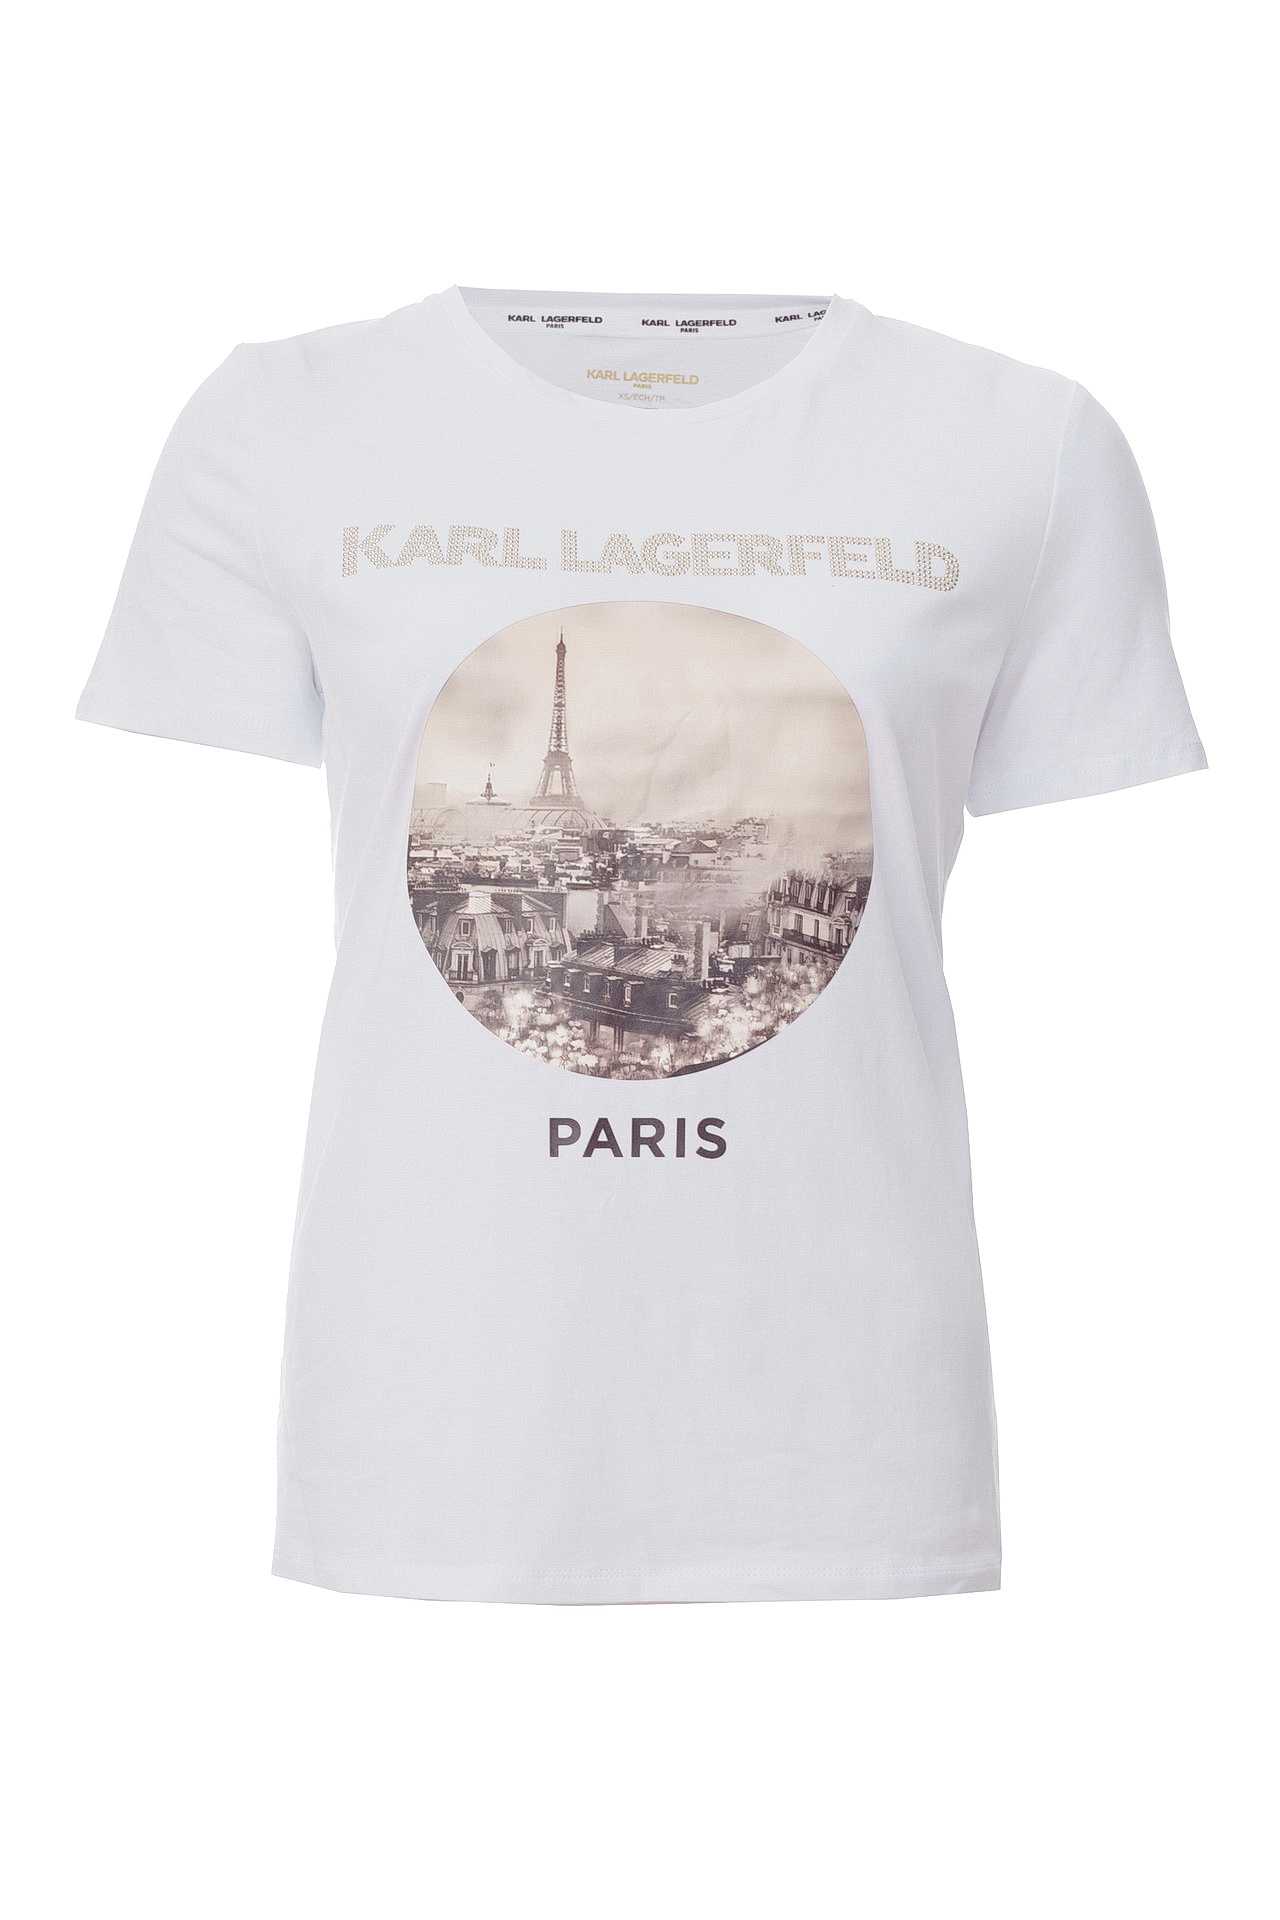 Одежда женская Футболка KARL LAGERFELD (L8WH0033/18.1). Купить за 6900 руб.